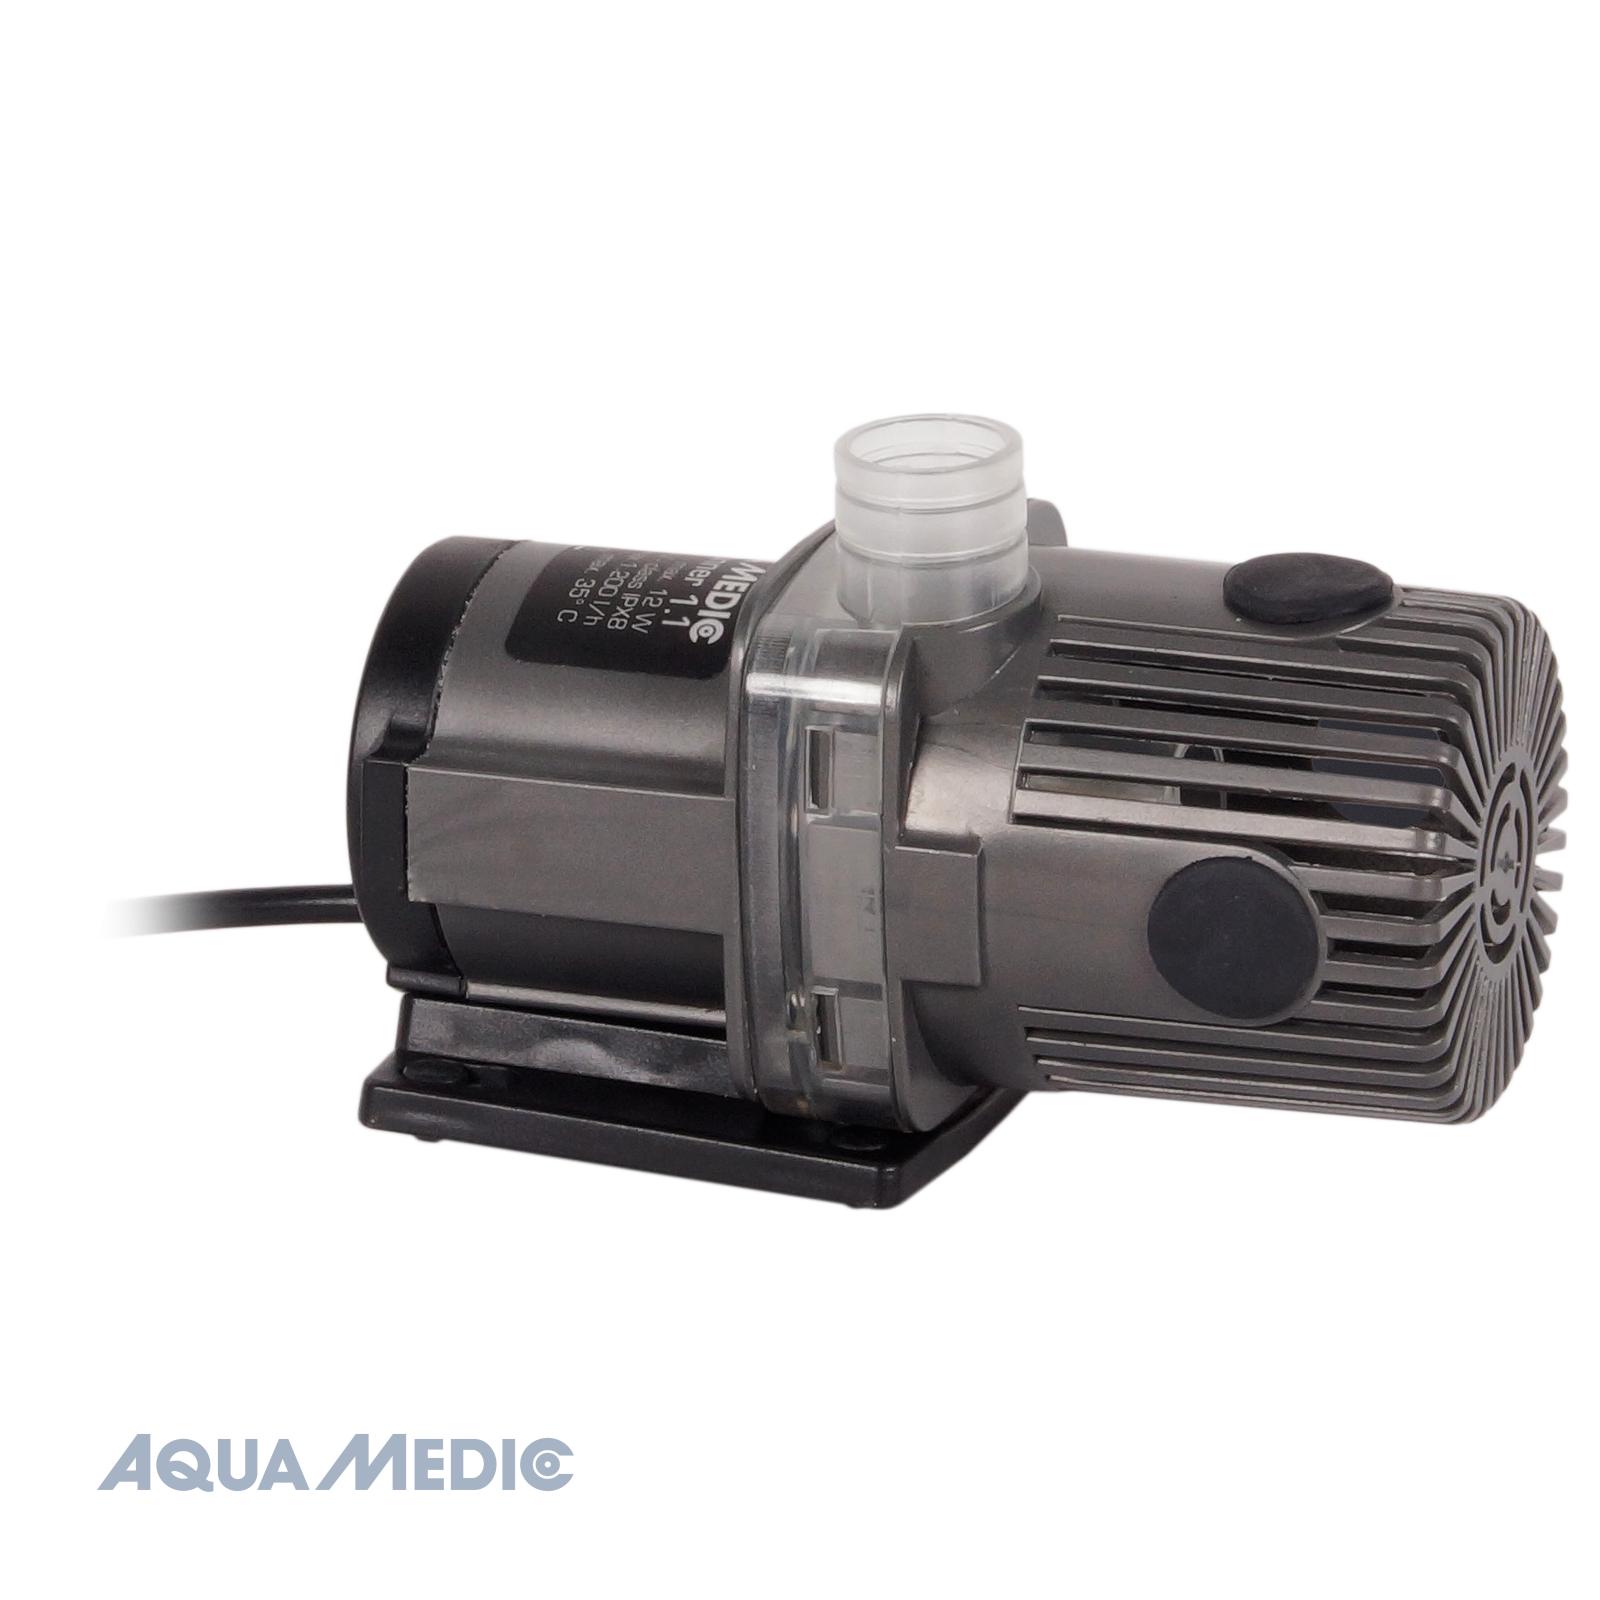 Aqua Medic EVO 1000